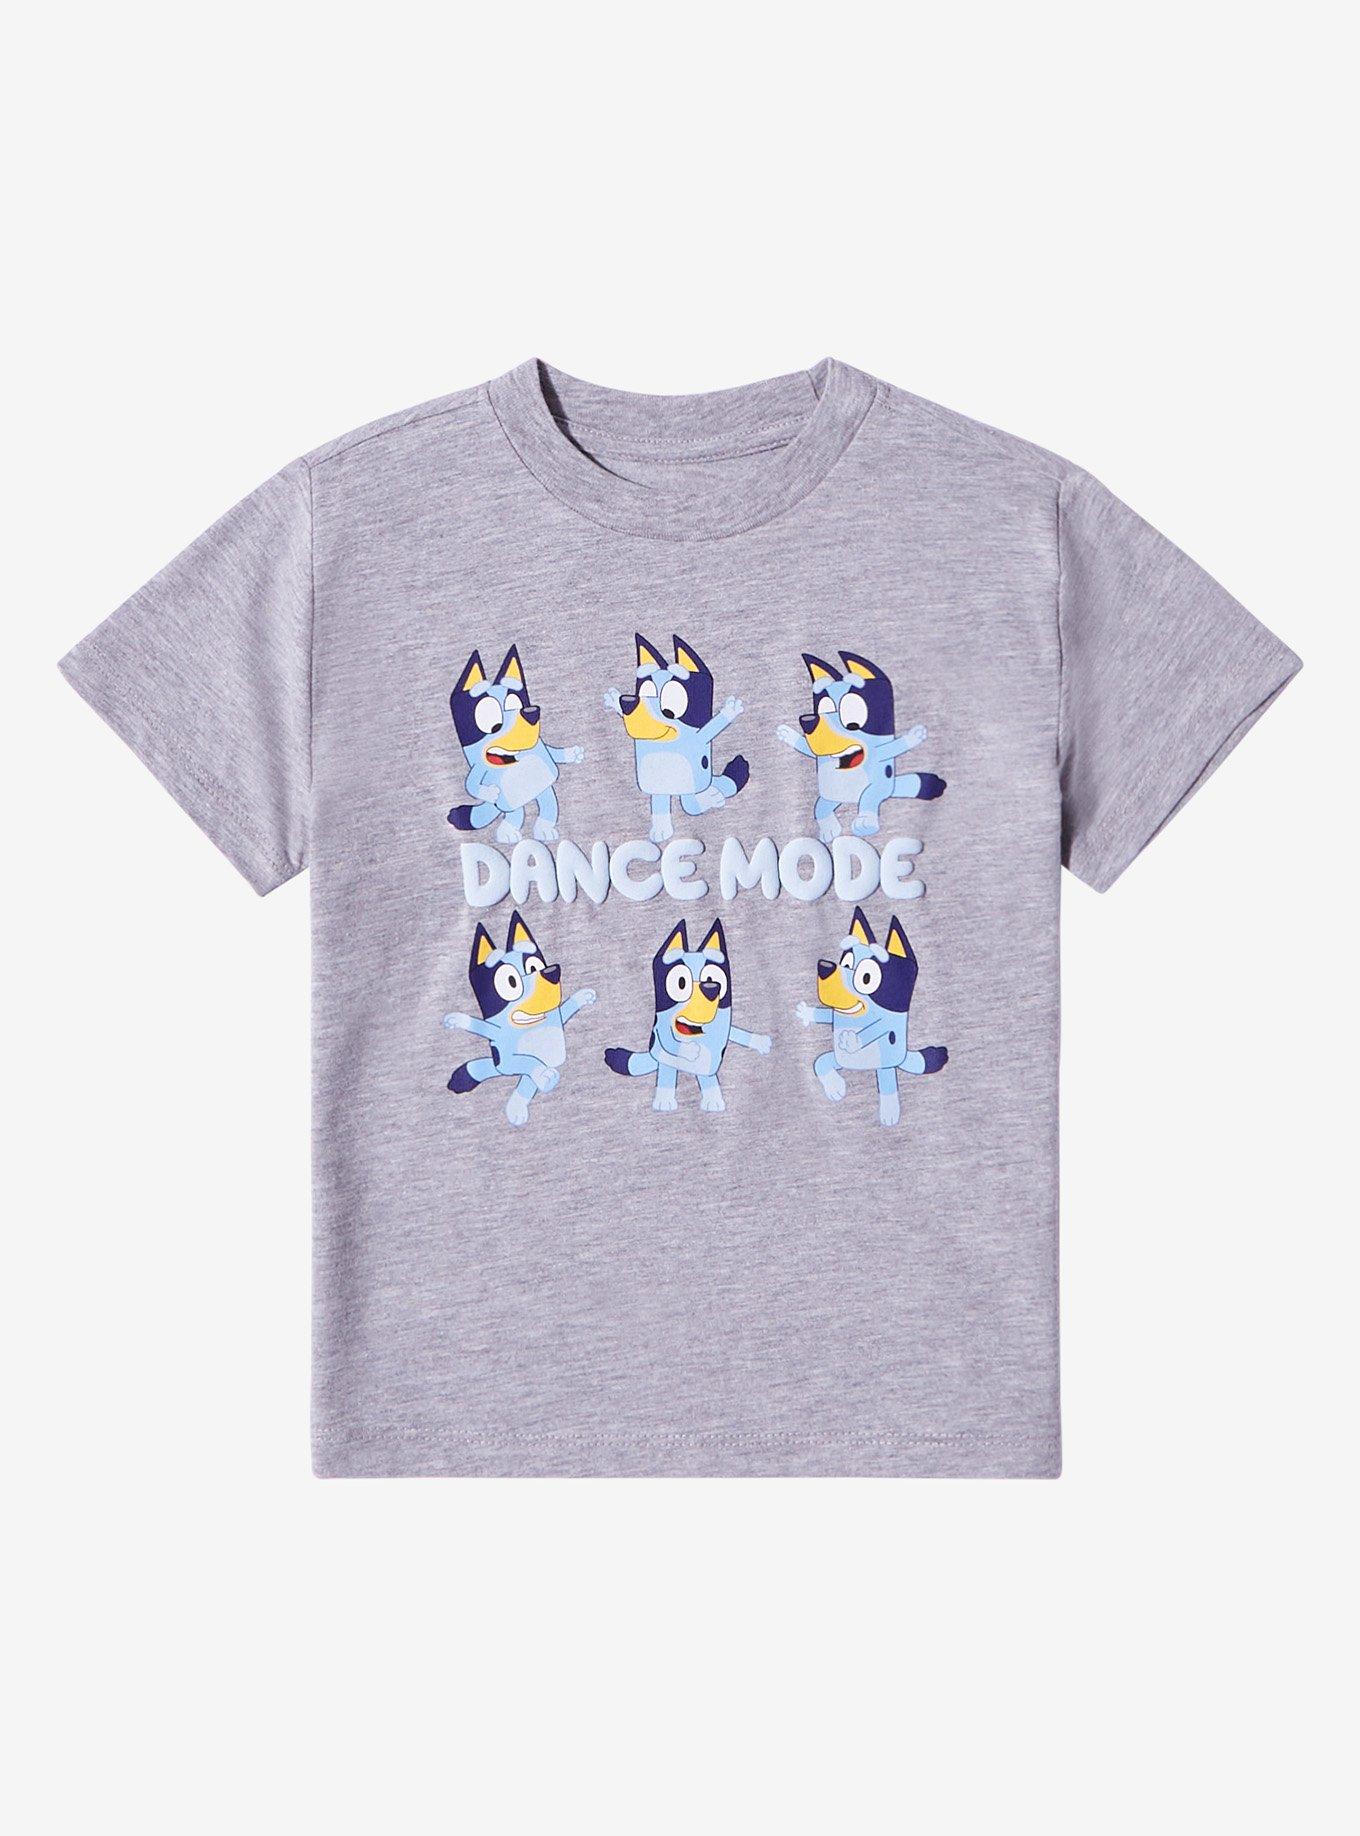 Bluey Toddler Boys Matching Family Long Sleeve T-Shirt 2T